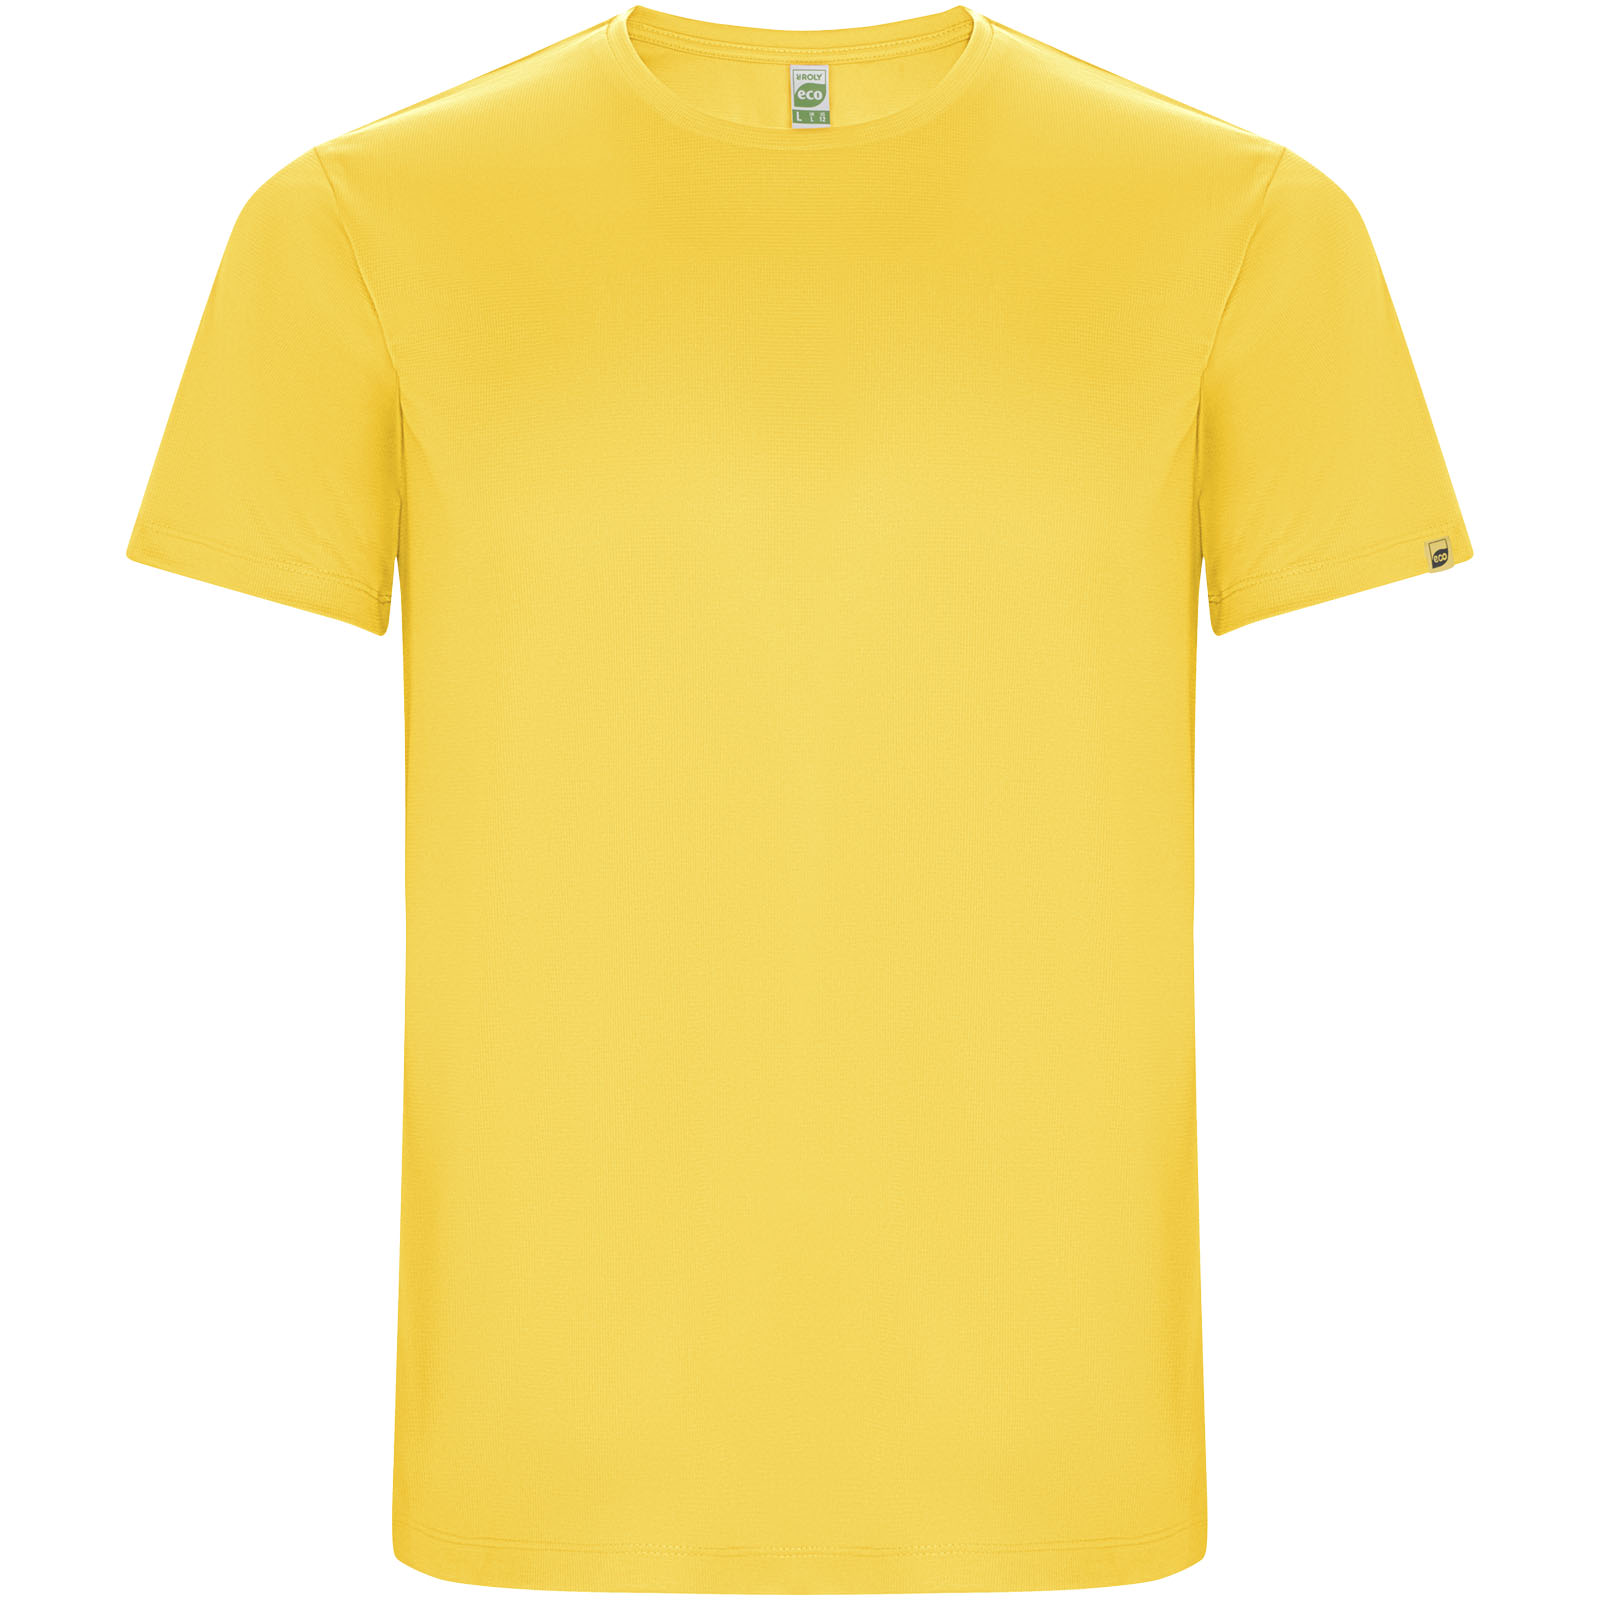 Advertising T-shirts - Imola short sleeve men's sports t-shirt